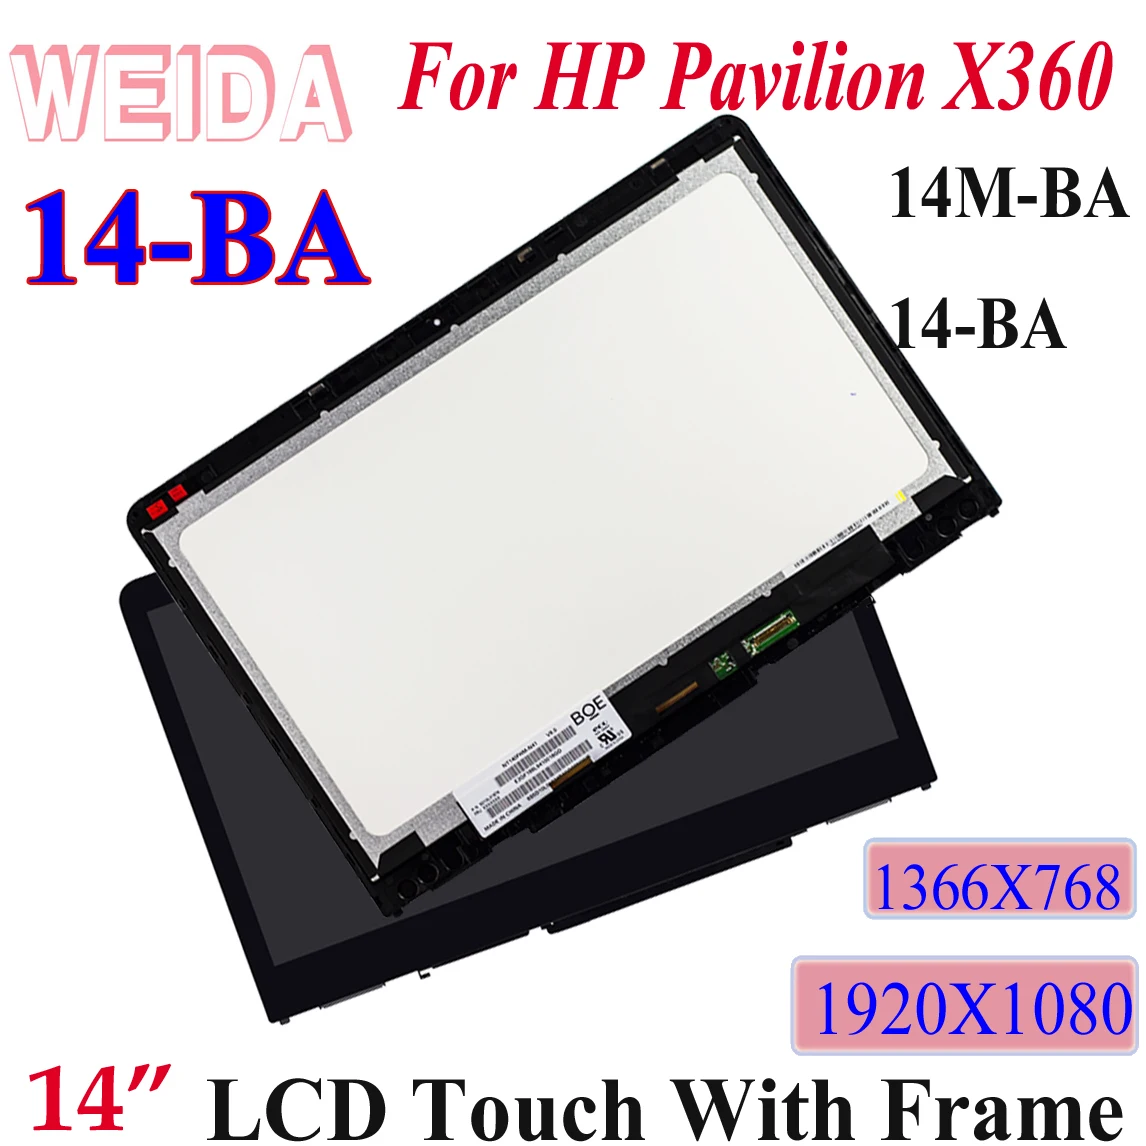 WEIDA LCD For HP PAVILION X360 14M-BA 14-BA Series 14